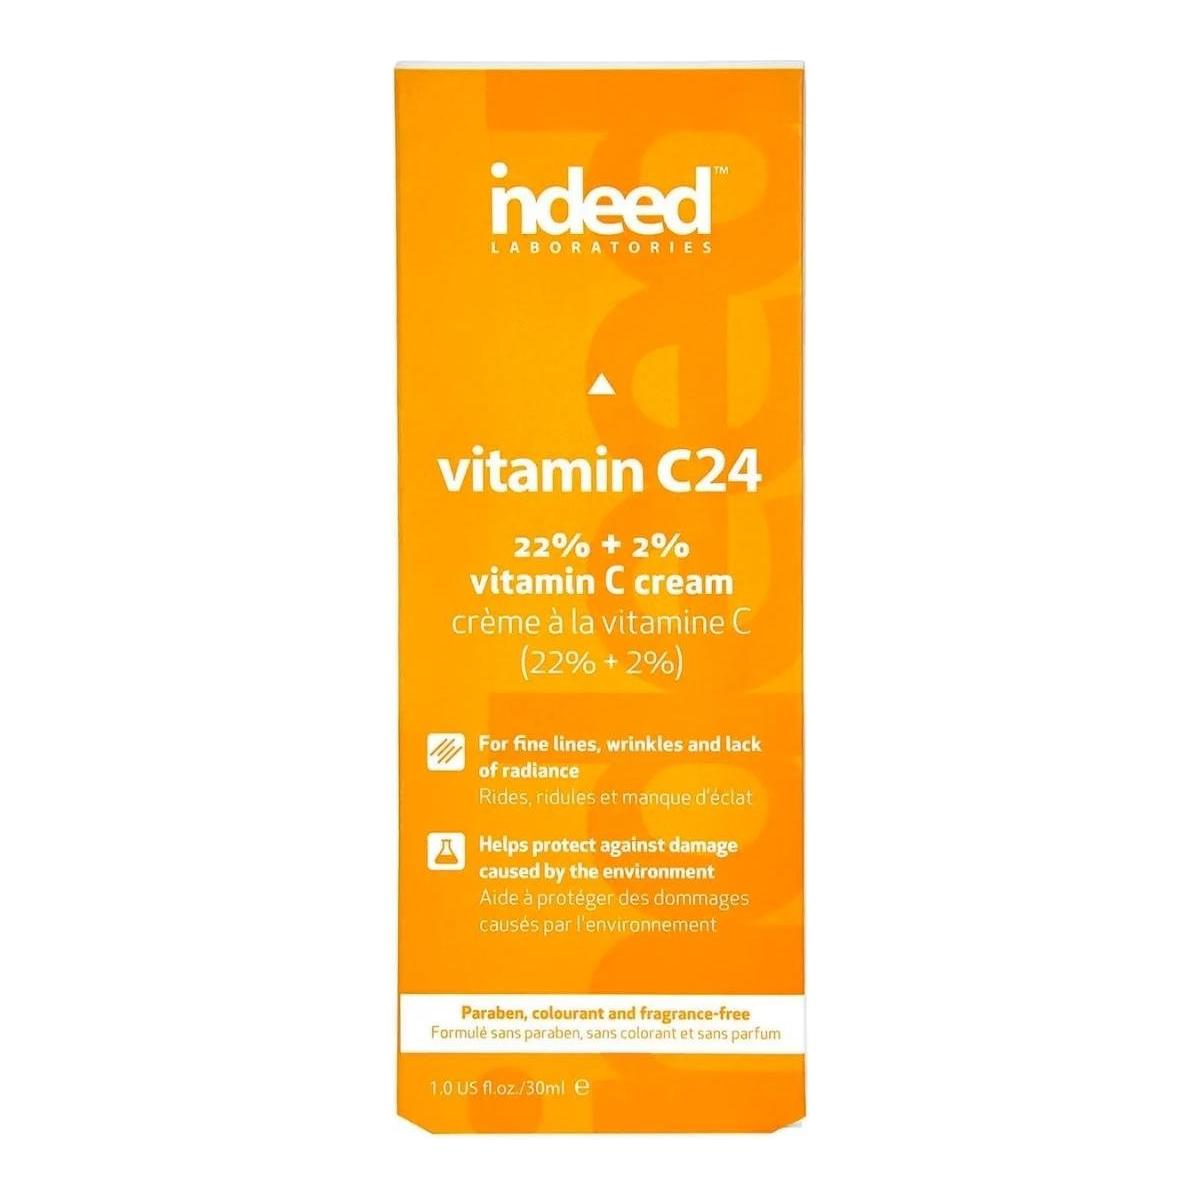 Indeed Labs | Vitamin C24 | 30ml - DG International Ventures Limited